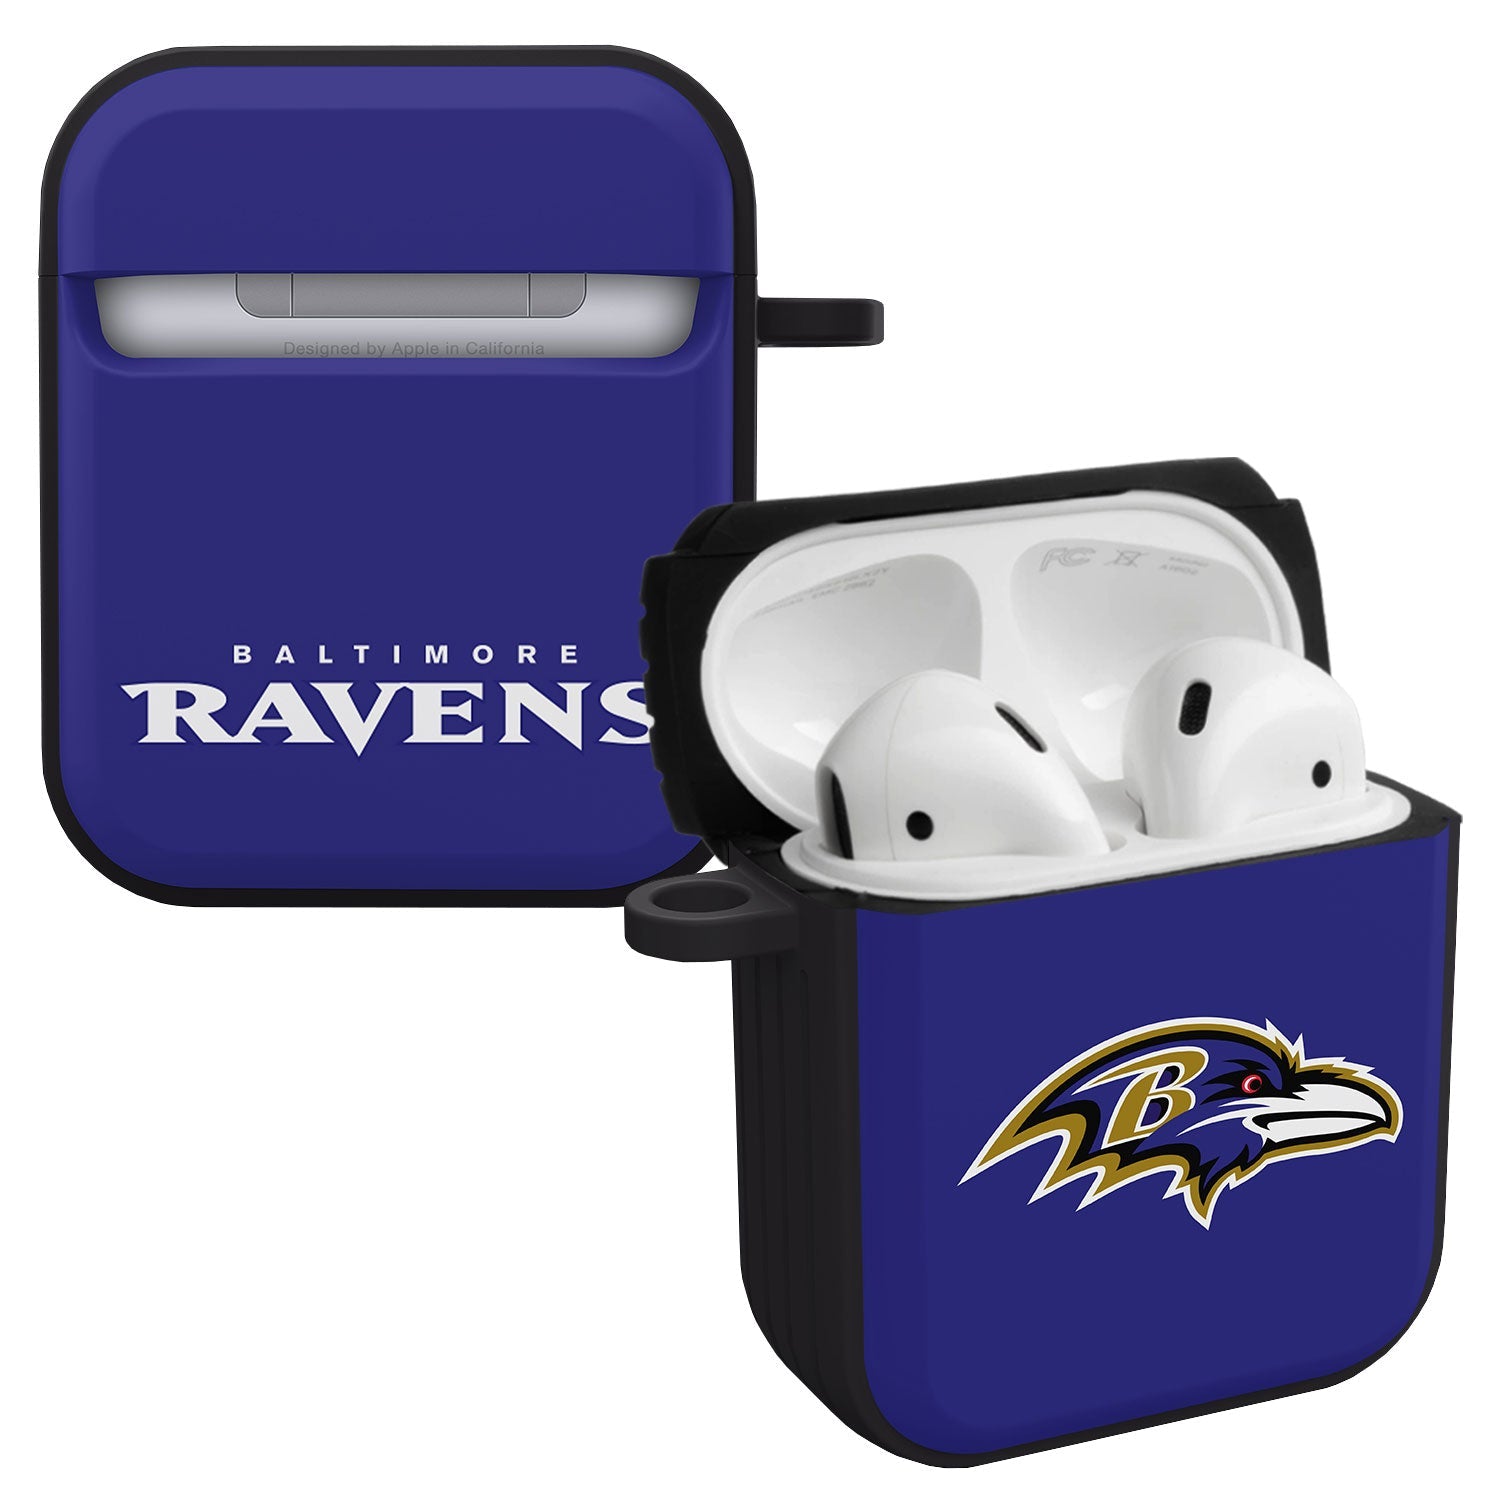 Baltimore Ravens HDX Apple AirPods Gen 1 & 2 Case Cover